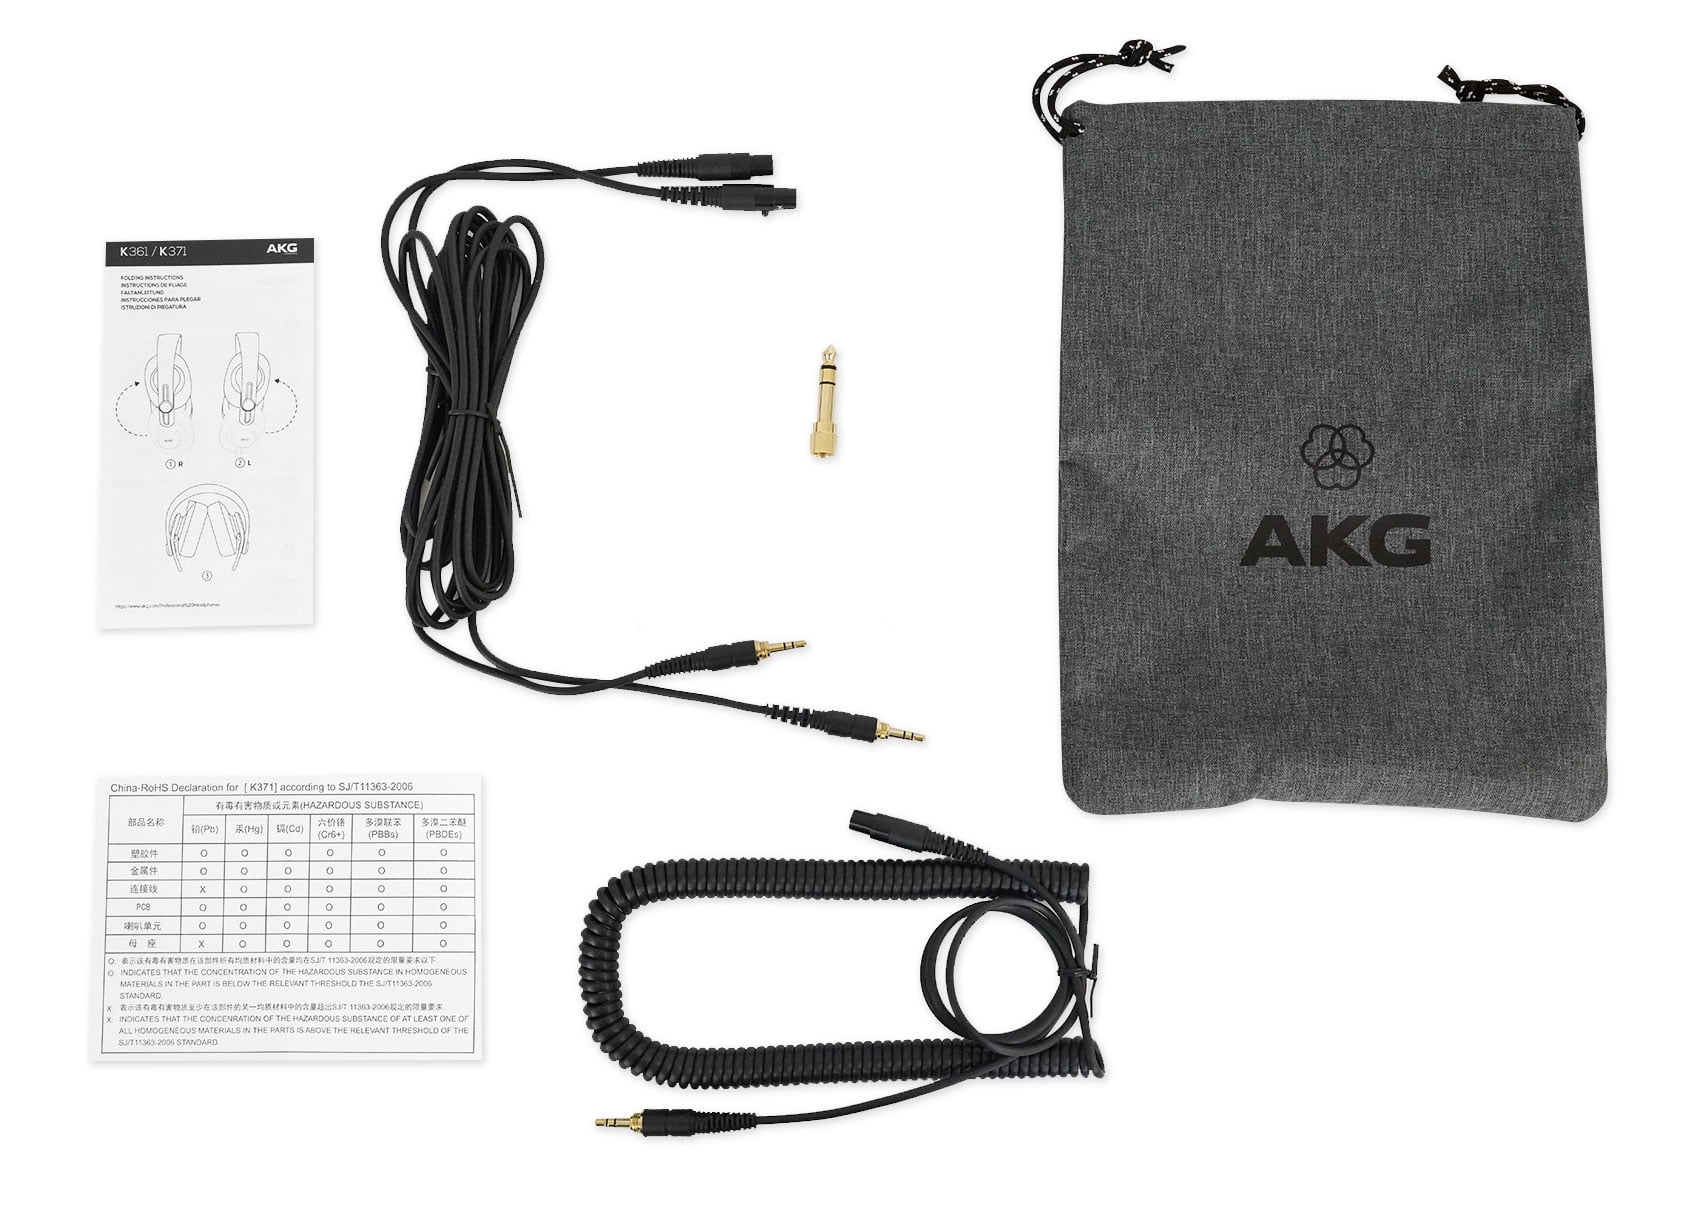 AKG K371 First-class Closed-back Headphones